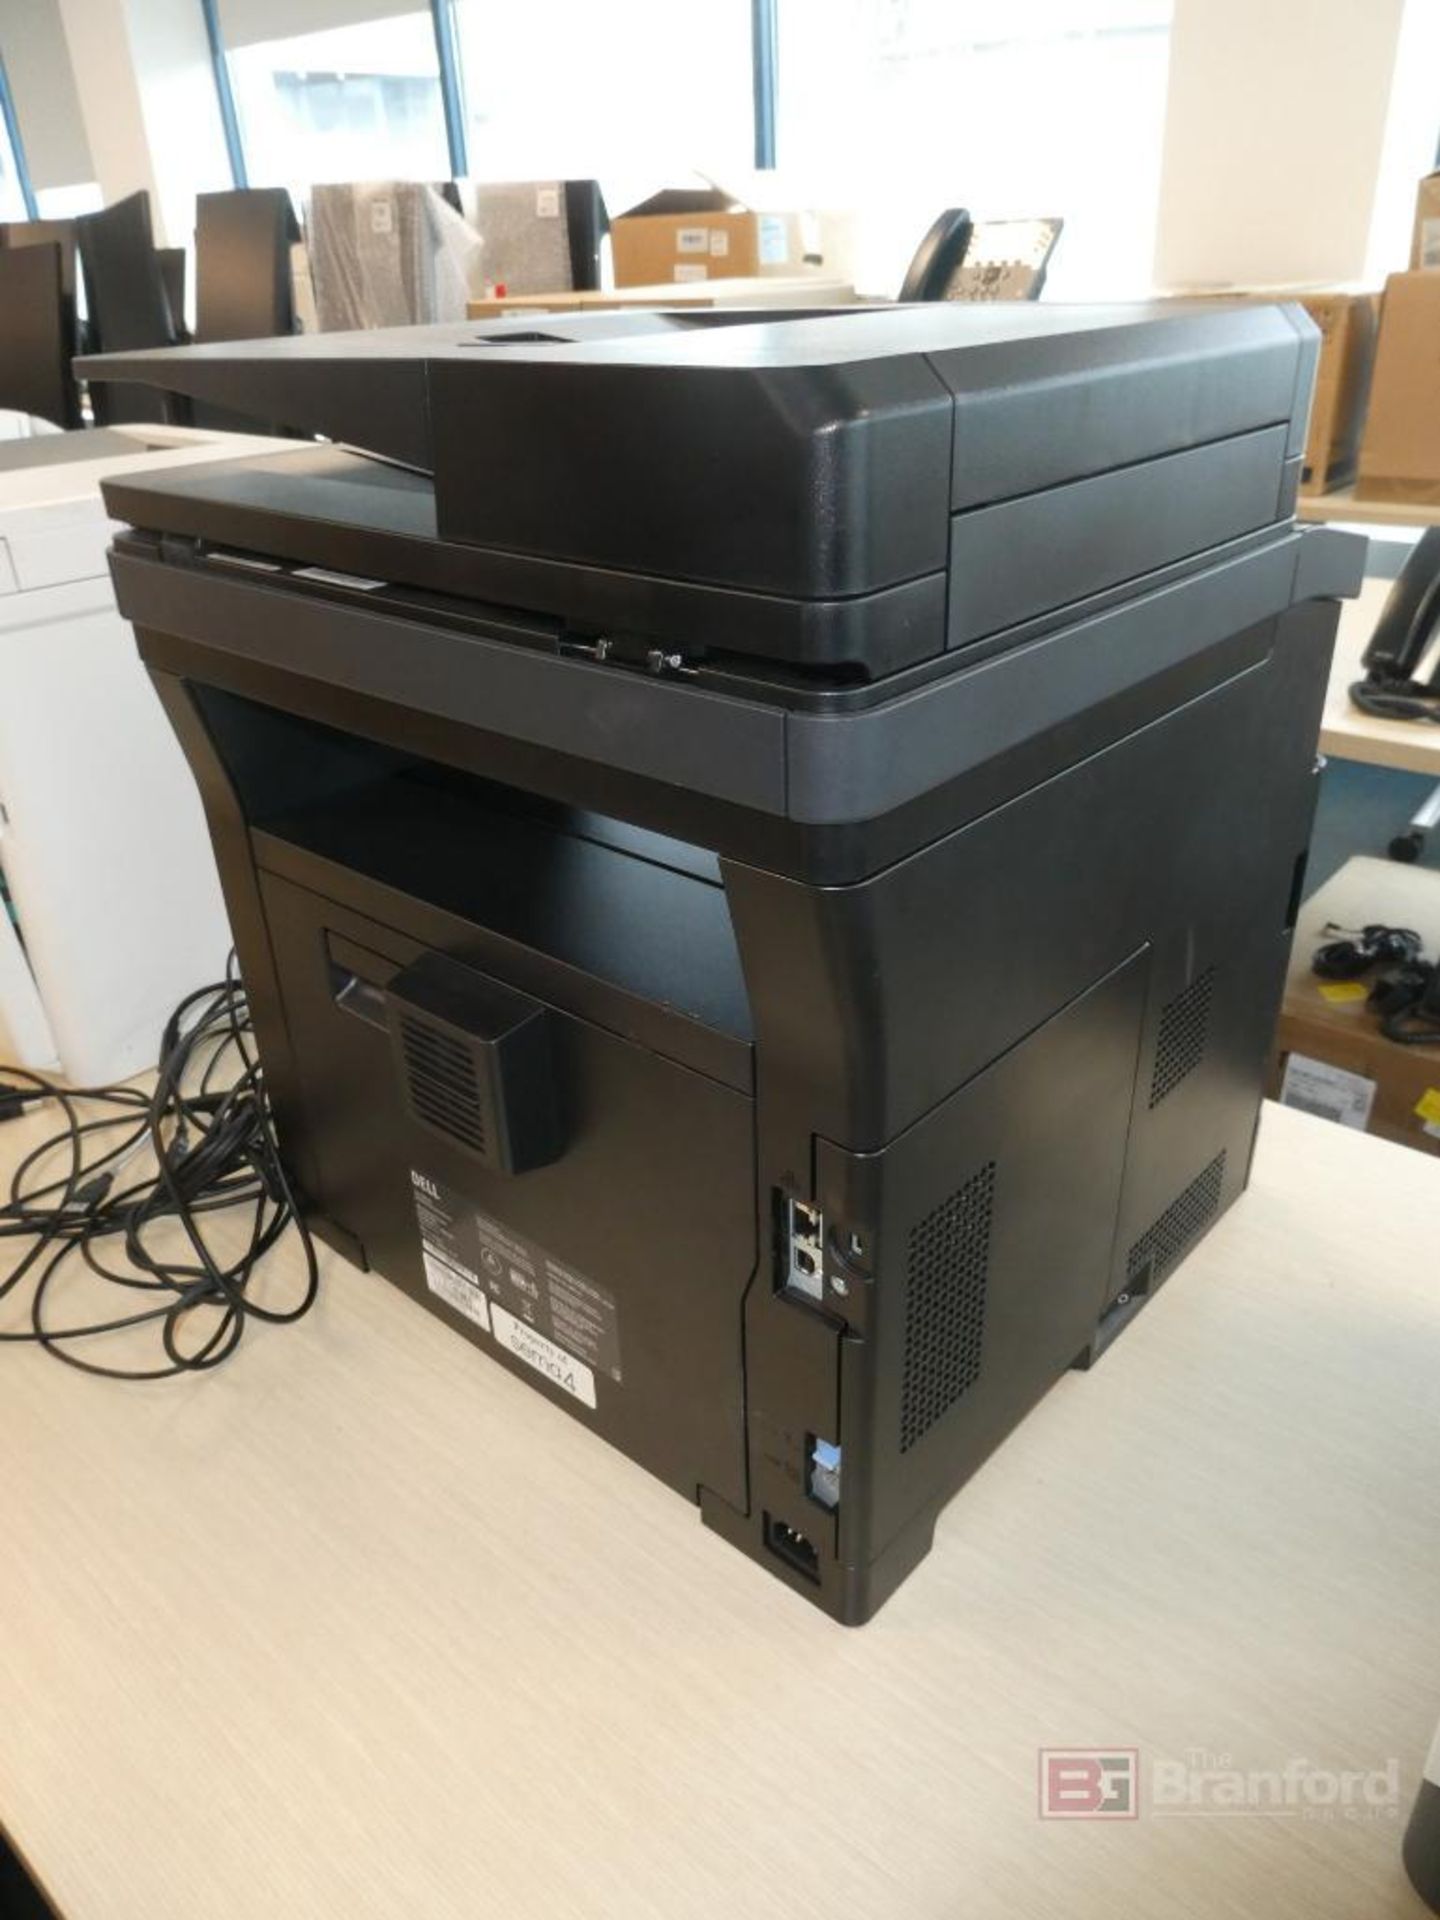 Dell S2815dn, Wireless Printer/Scanner/Copy/Fax Machine - Image 2 of 3